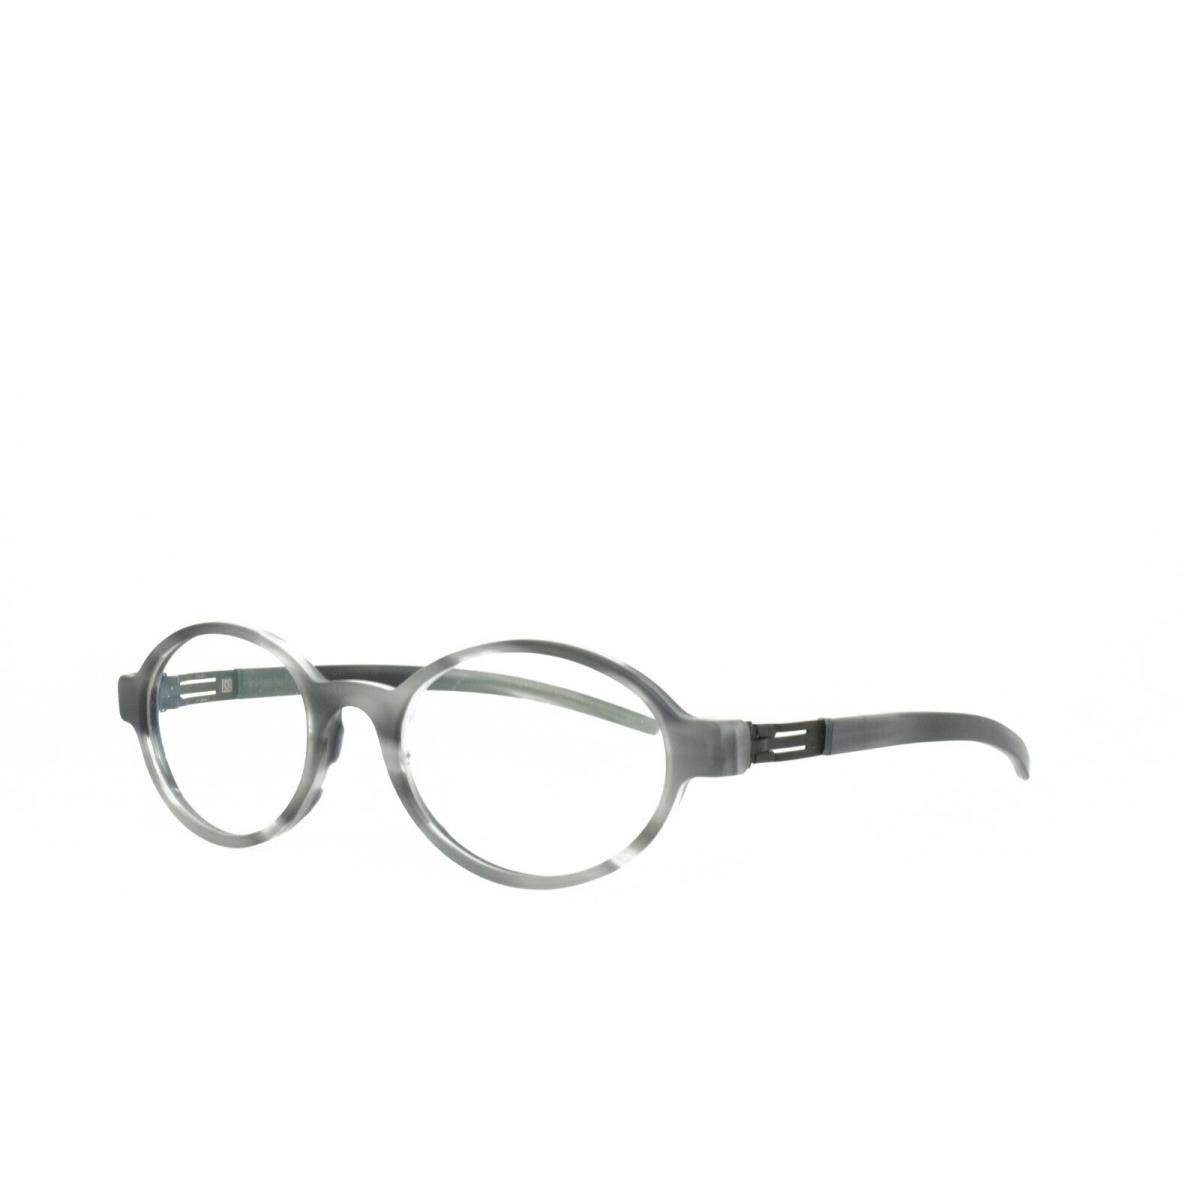 iC Berlin Eyeglasses Franziska Von S.-a. East Black Smokey Matte 48-20-145 Asian